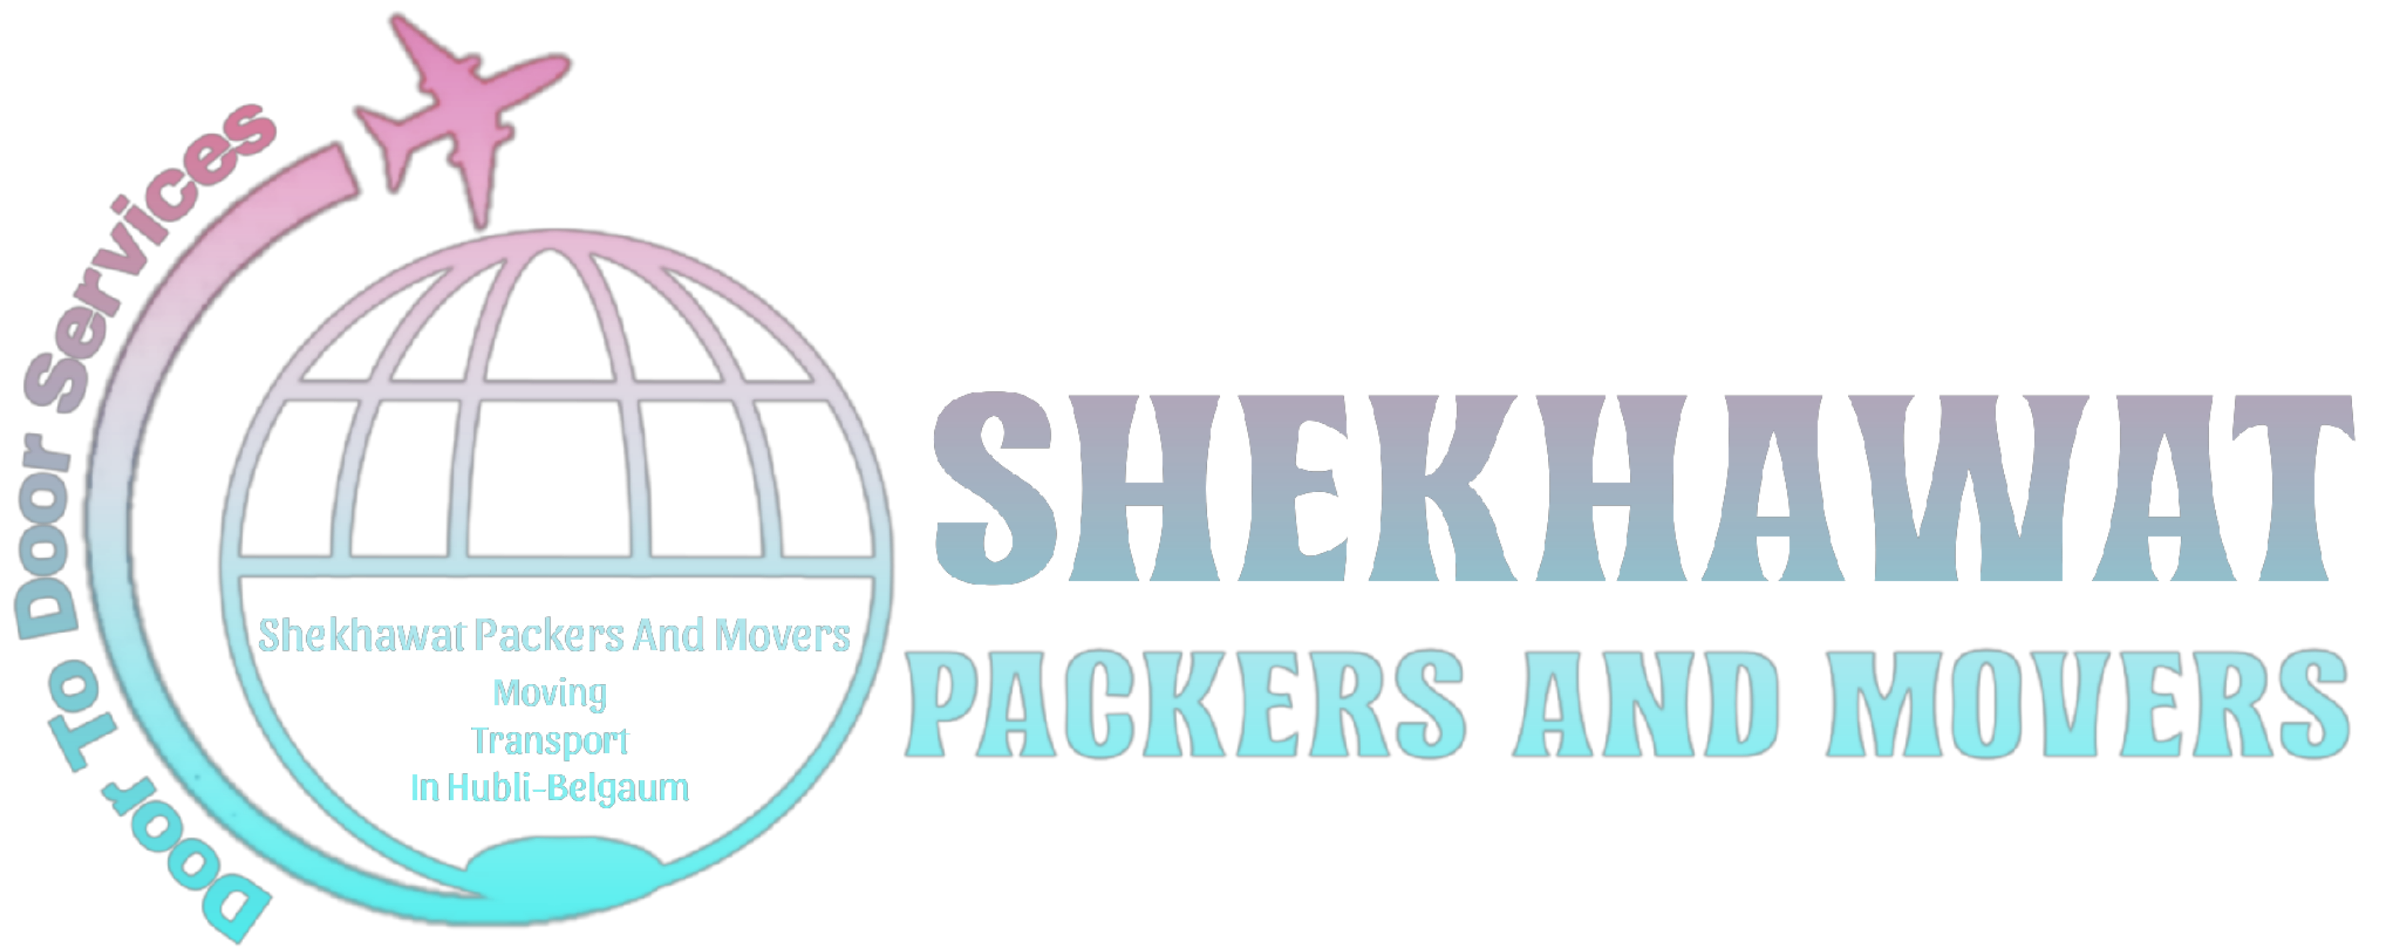 Shekhawat packers logo